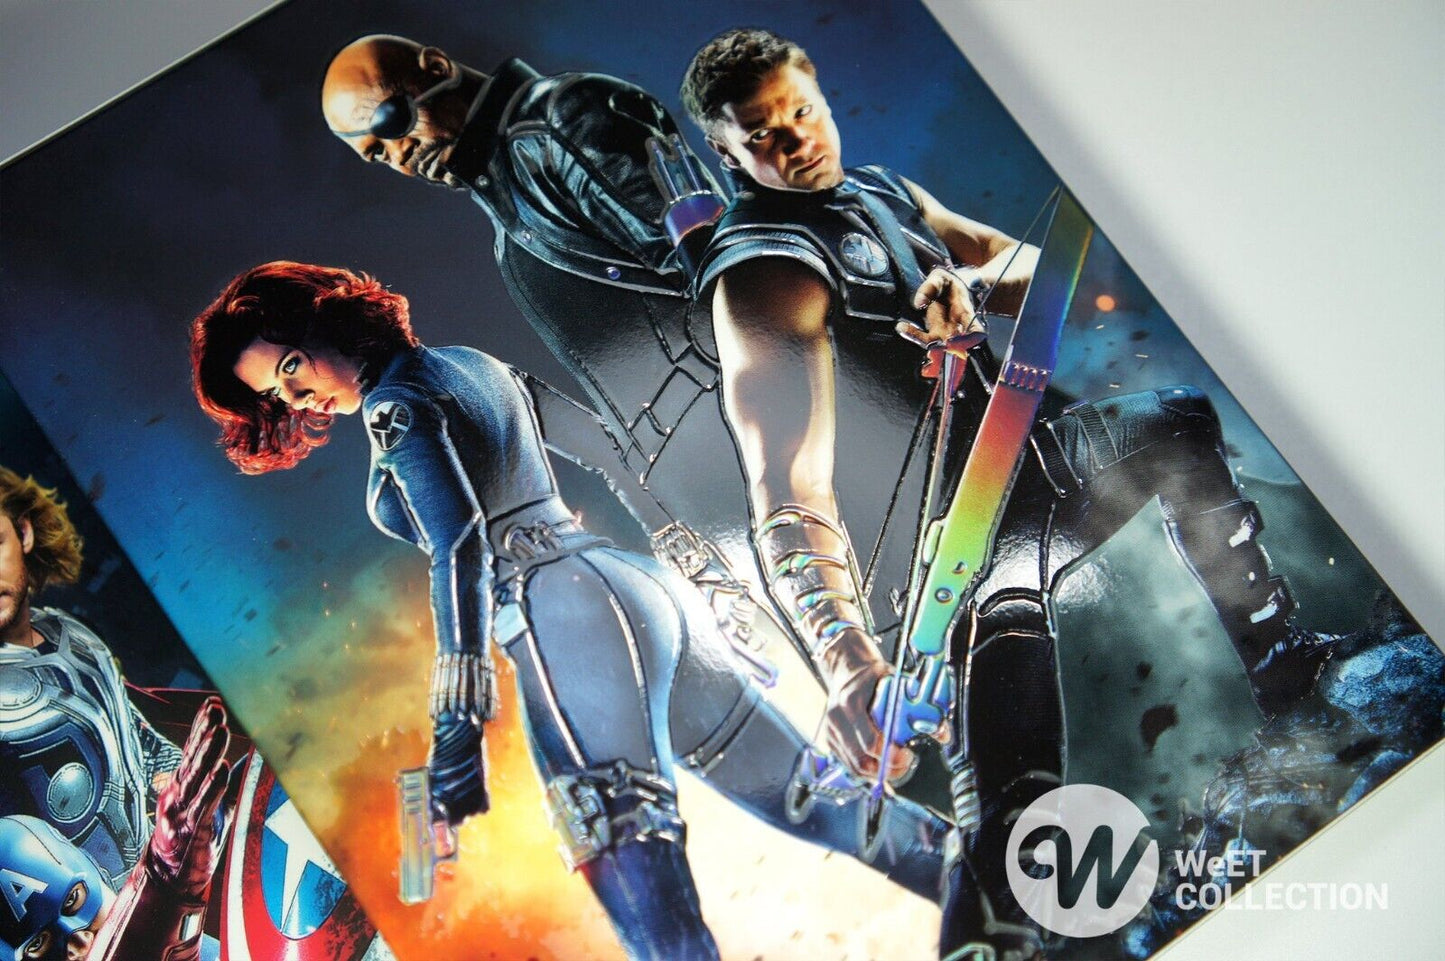 Avengers 4K+2D Blu-ray SteelBook WeET Collection Exclusive #14 Lenticular Full Slip B2